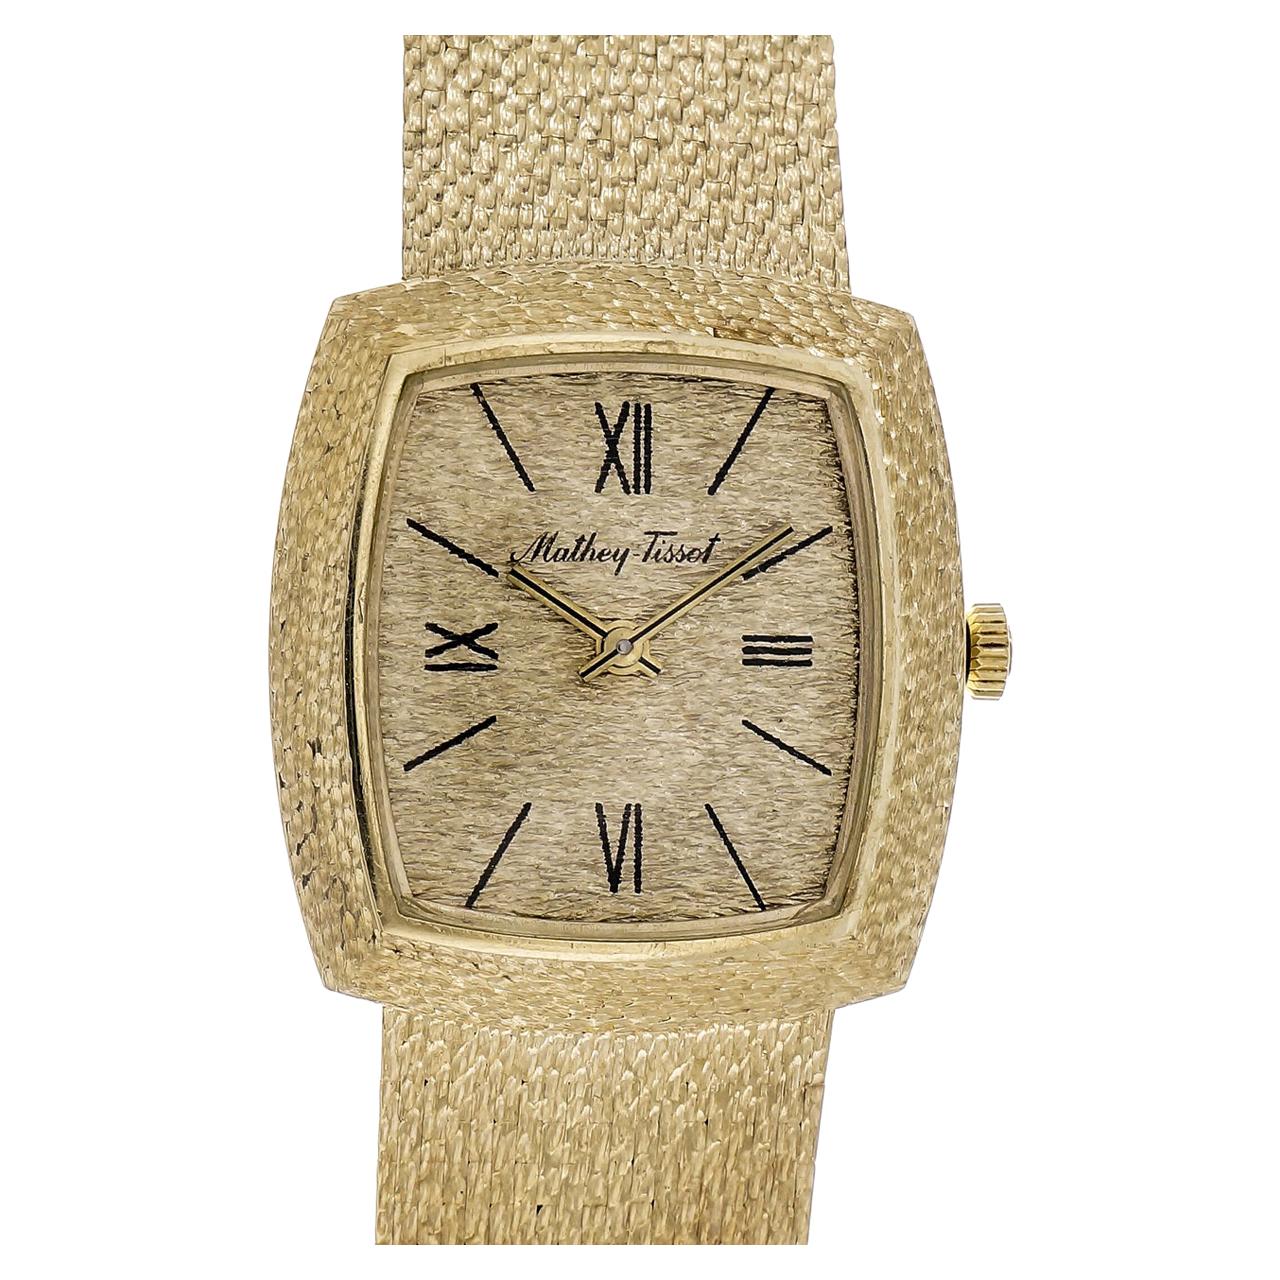 Mathey Tissot 1960 Textured 14k Gold Wrist Watch For Sale